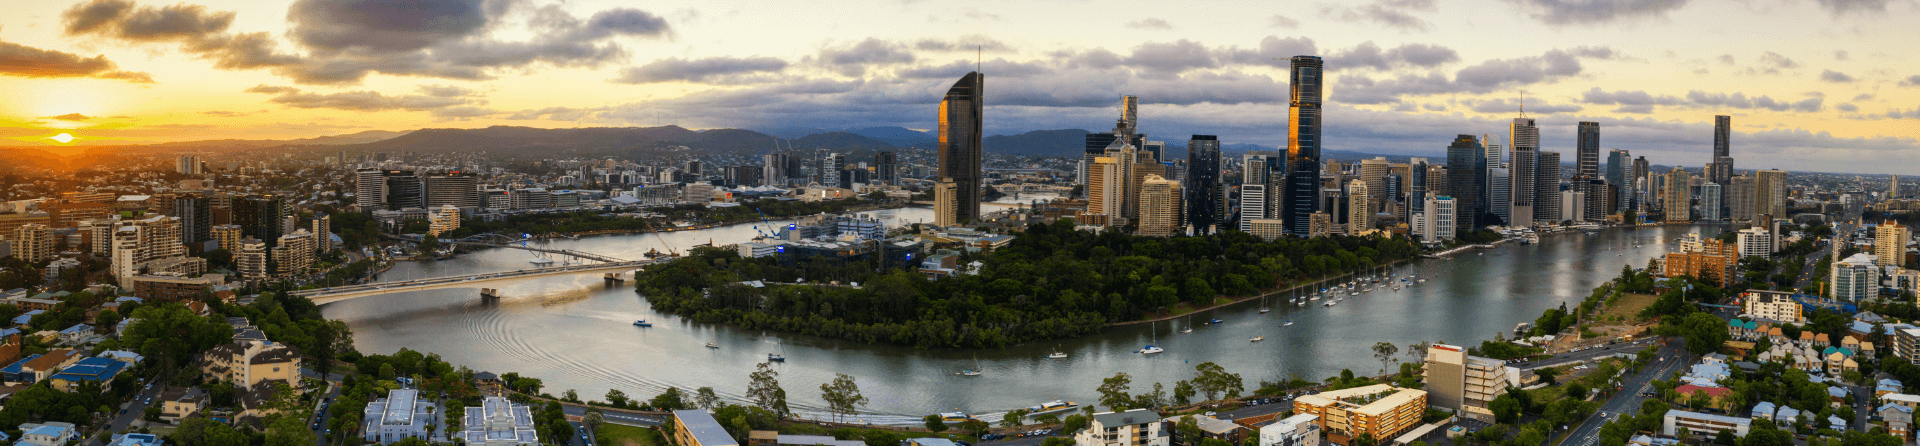 Top 5 lookouts in Brisbane